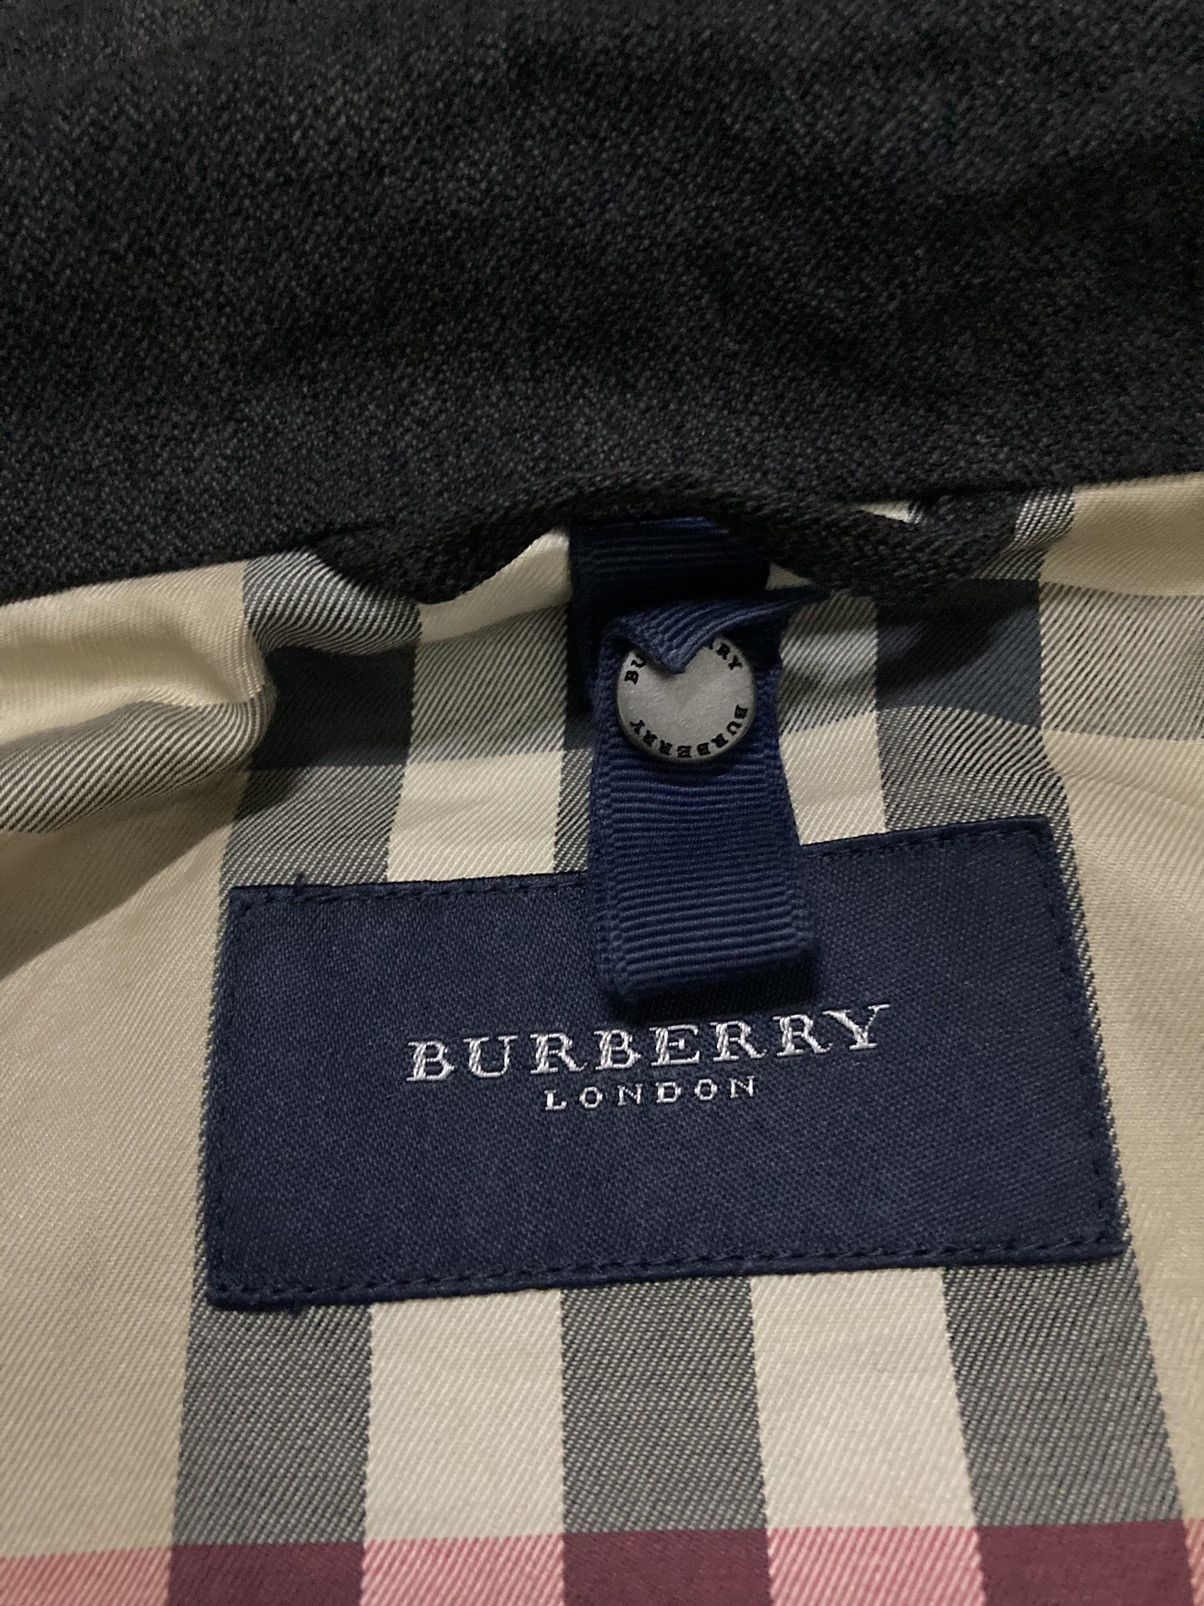 Burberry London Blouson Stored Hooded Jacket - 19